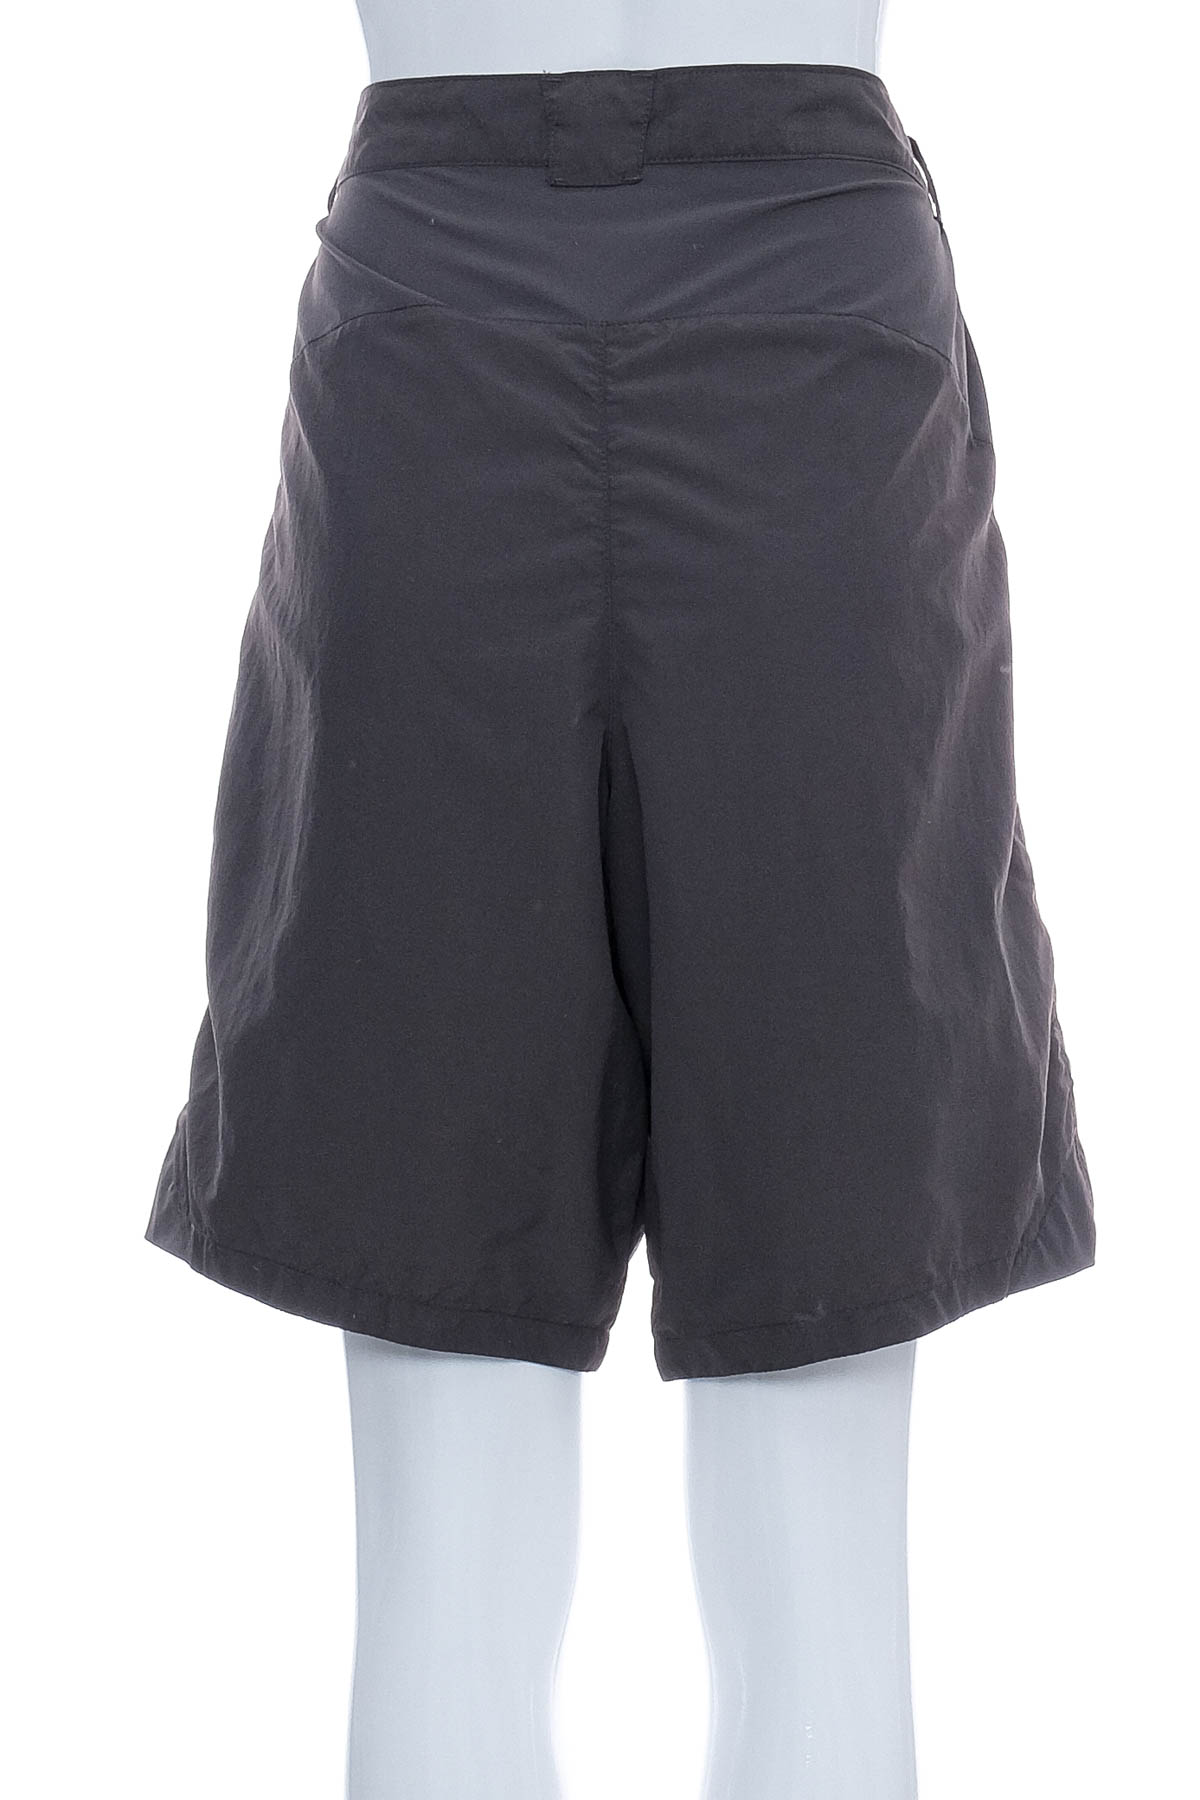 Female shorts - DECATHLON - 1